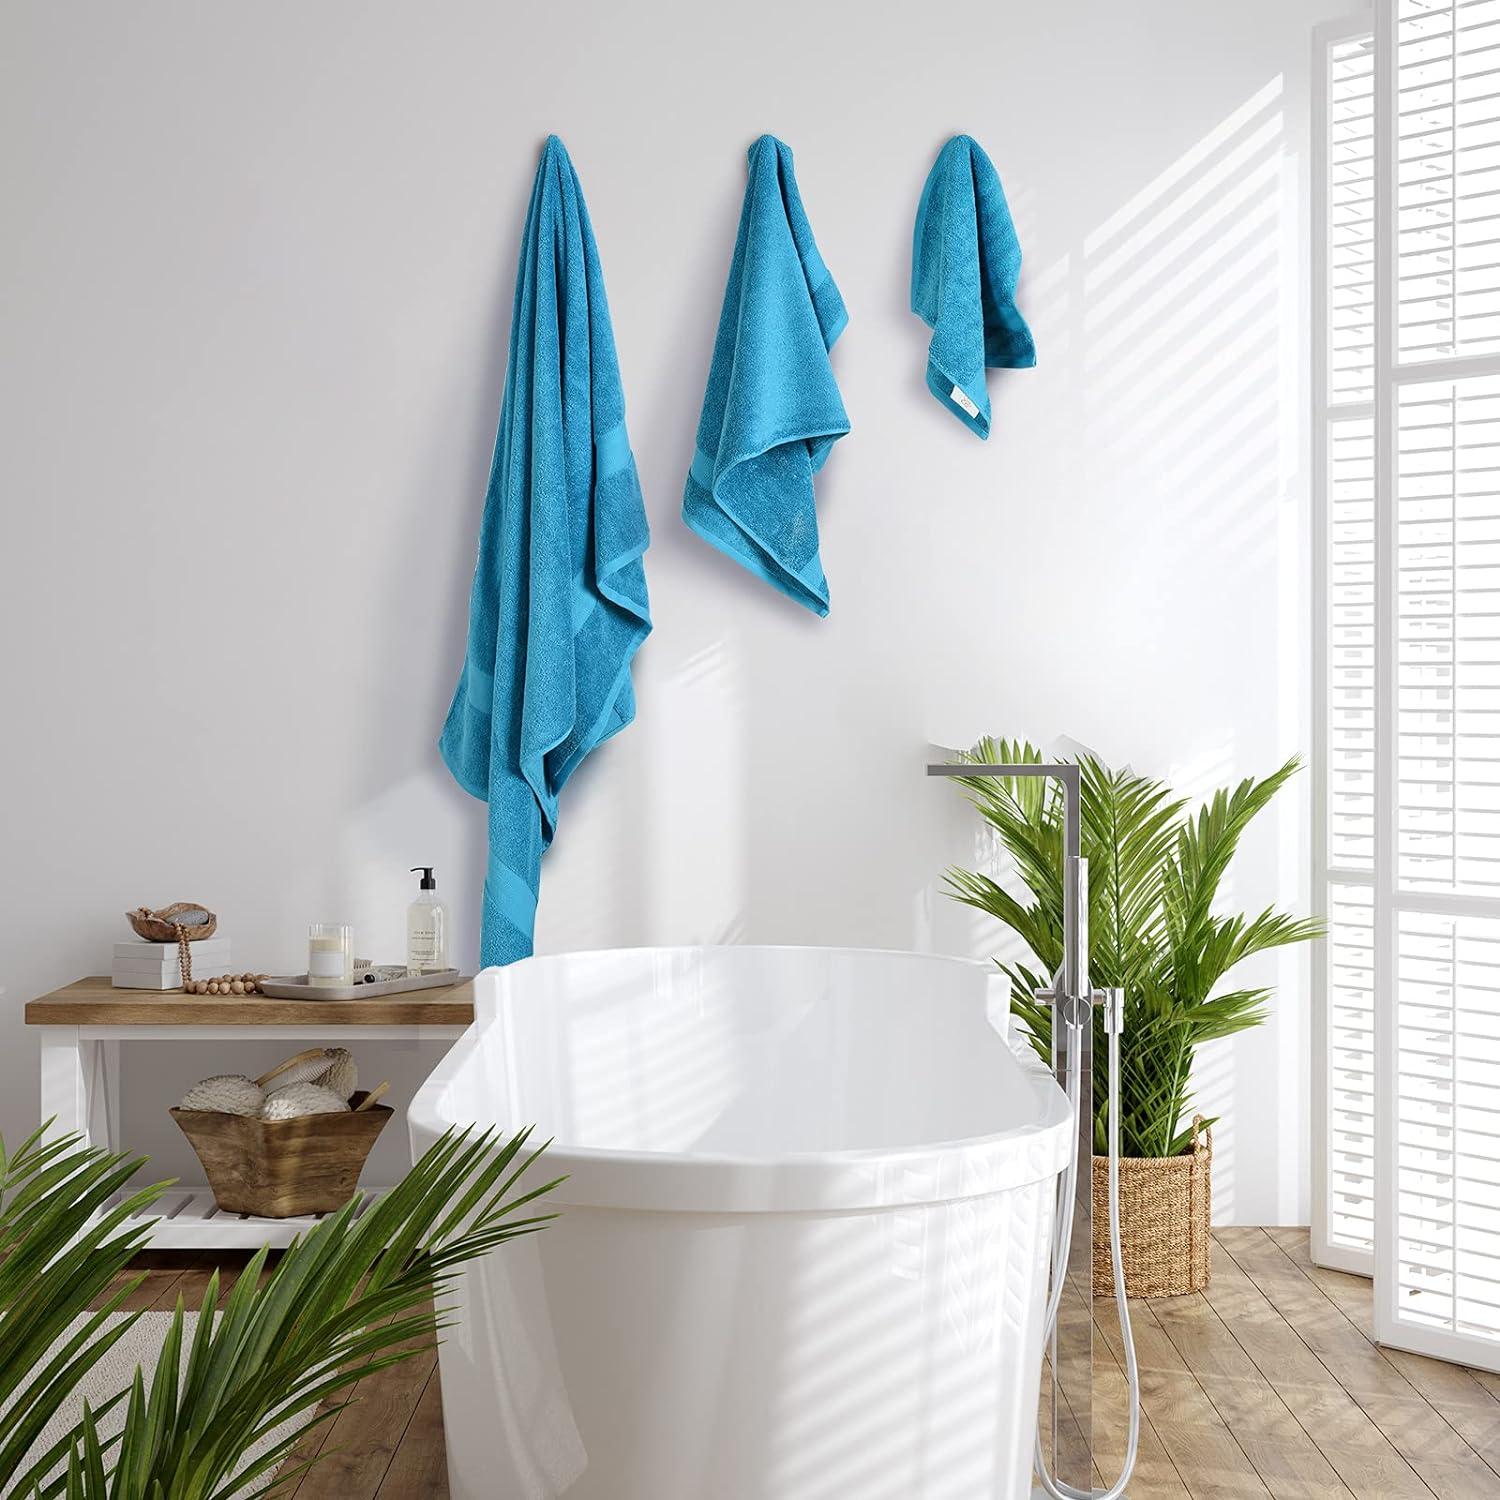 Premium 100% Cotton Bath Towel Set;1 Bath Towels,1 Hand Towel & 1 Washcloth,Luxury Bathroom Super Soft and Highly Absorbent,Hotel & Spa Quality